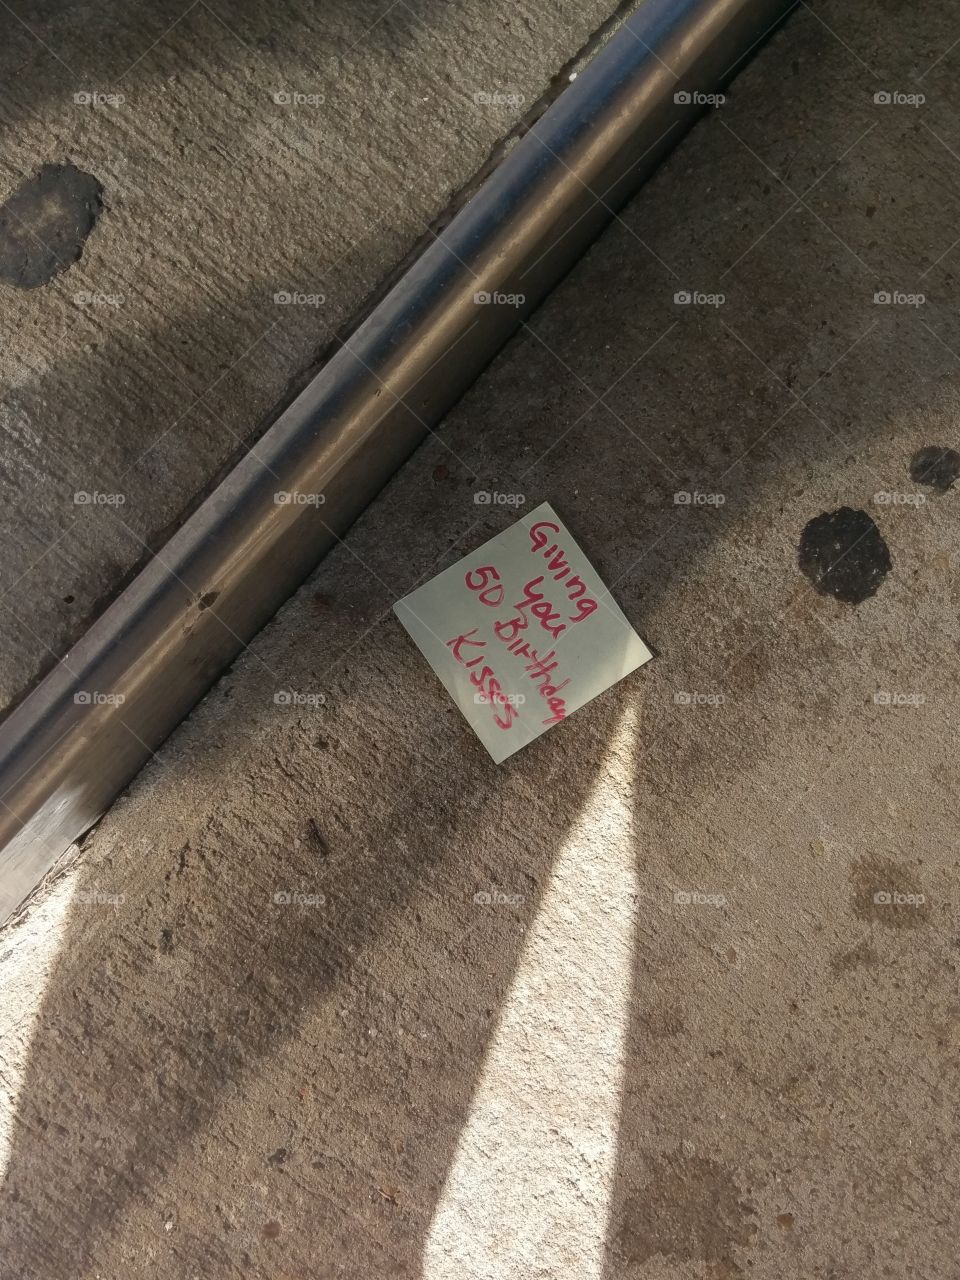 Random love note on the street